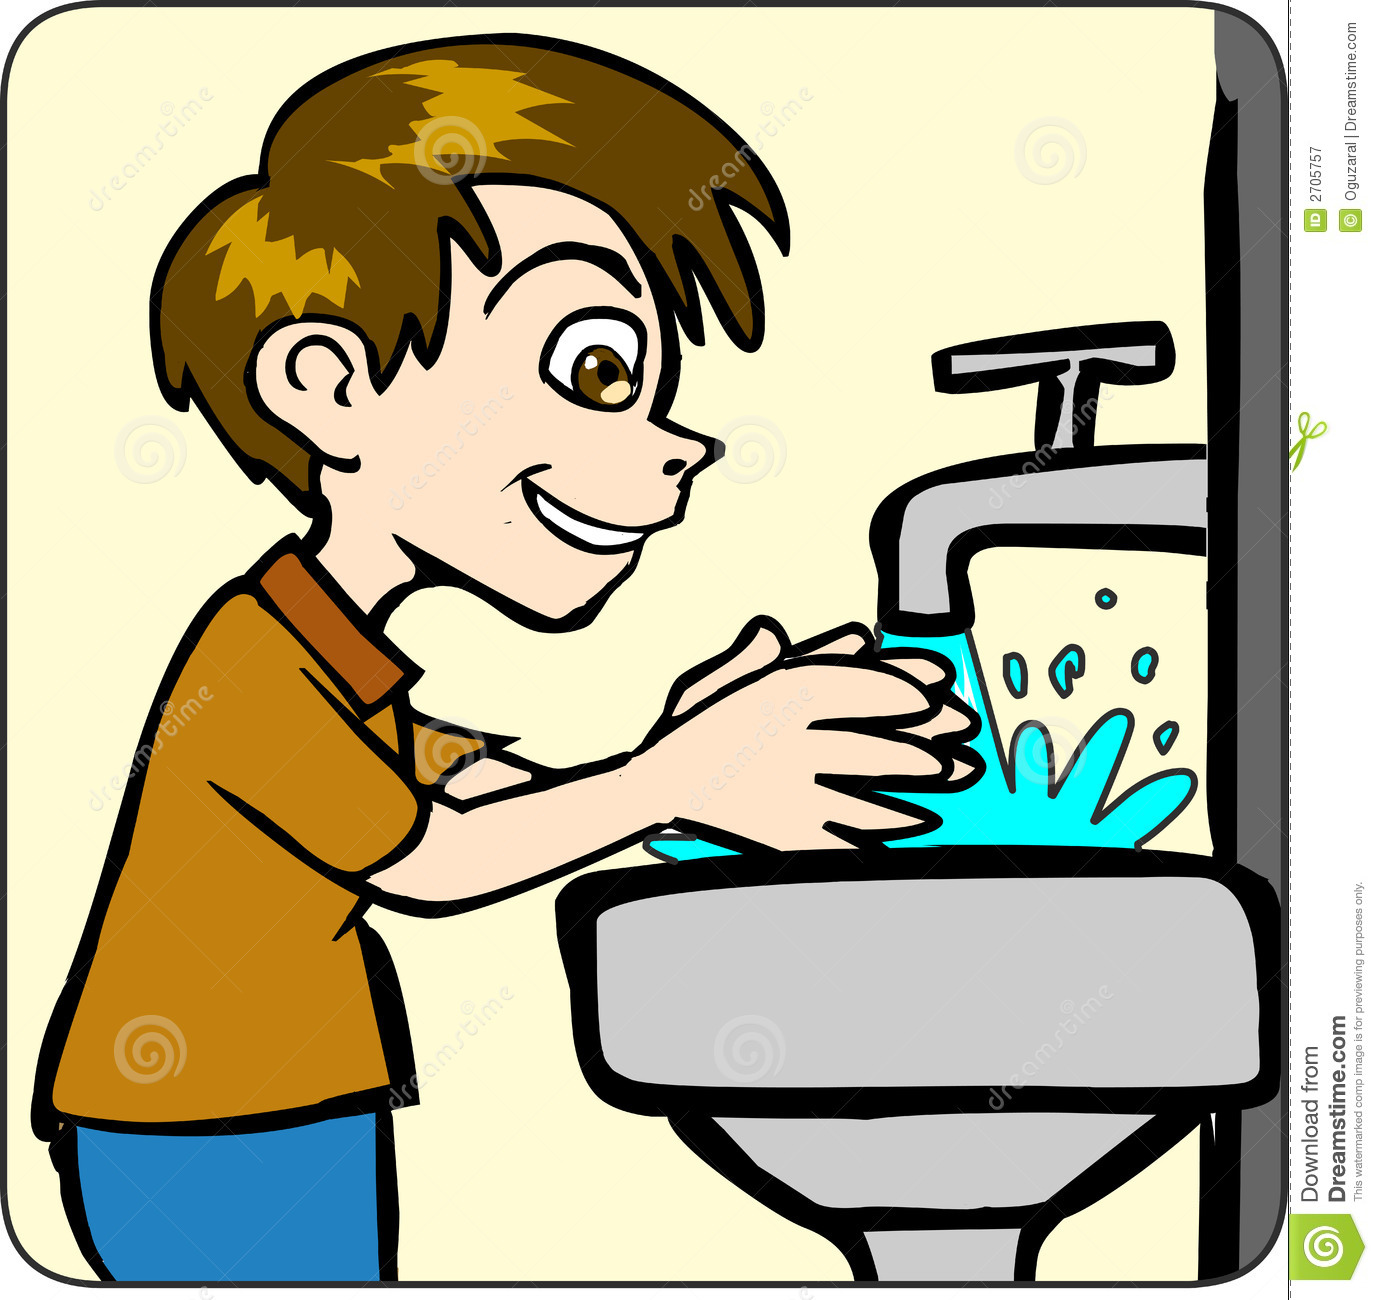 Washing hands Wash hands illustrations clipart jpg